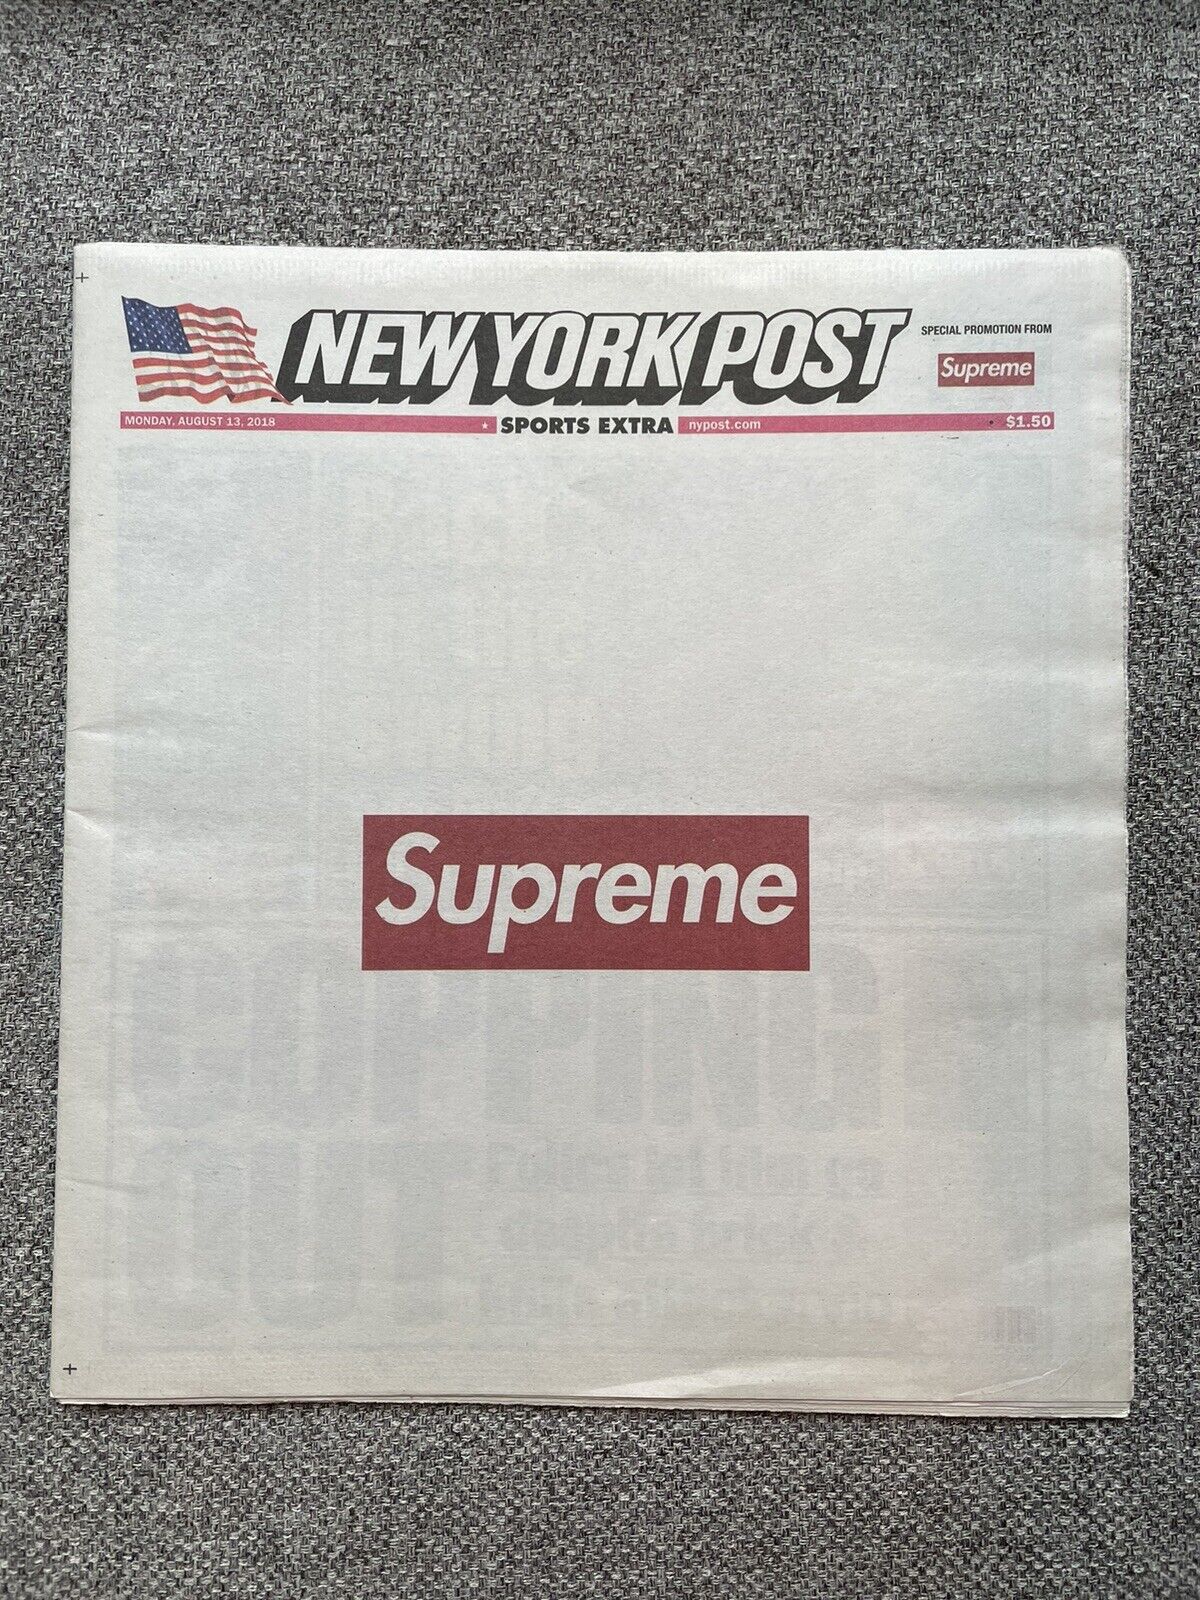 Supreme Newspaper - New York Post “Sports Extra” Edition 